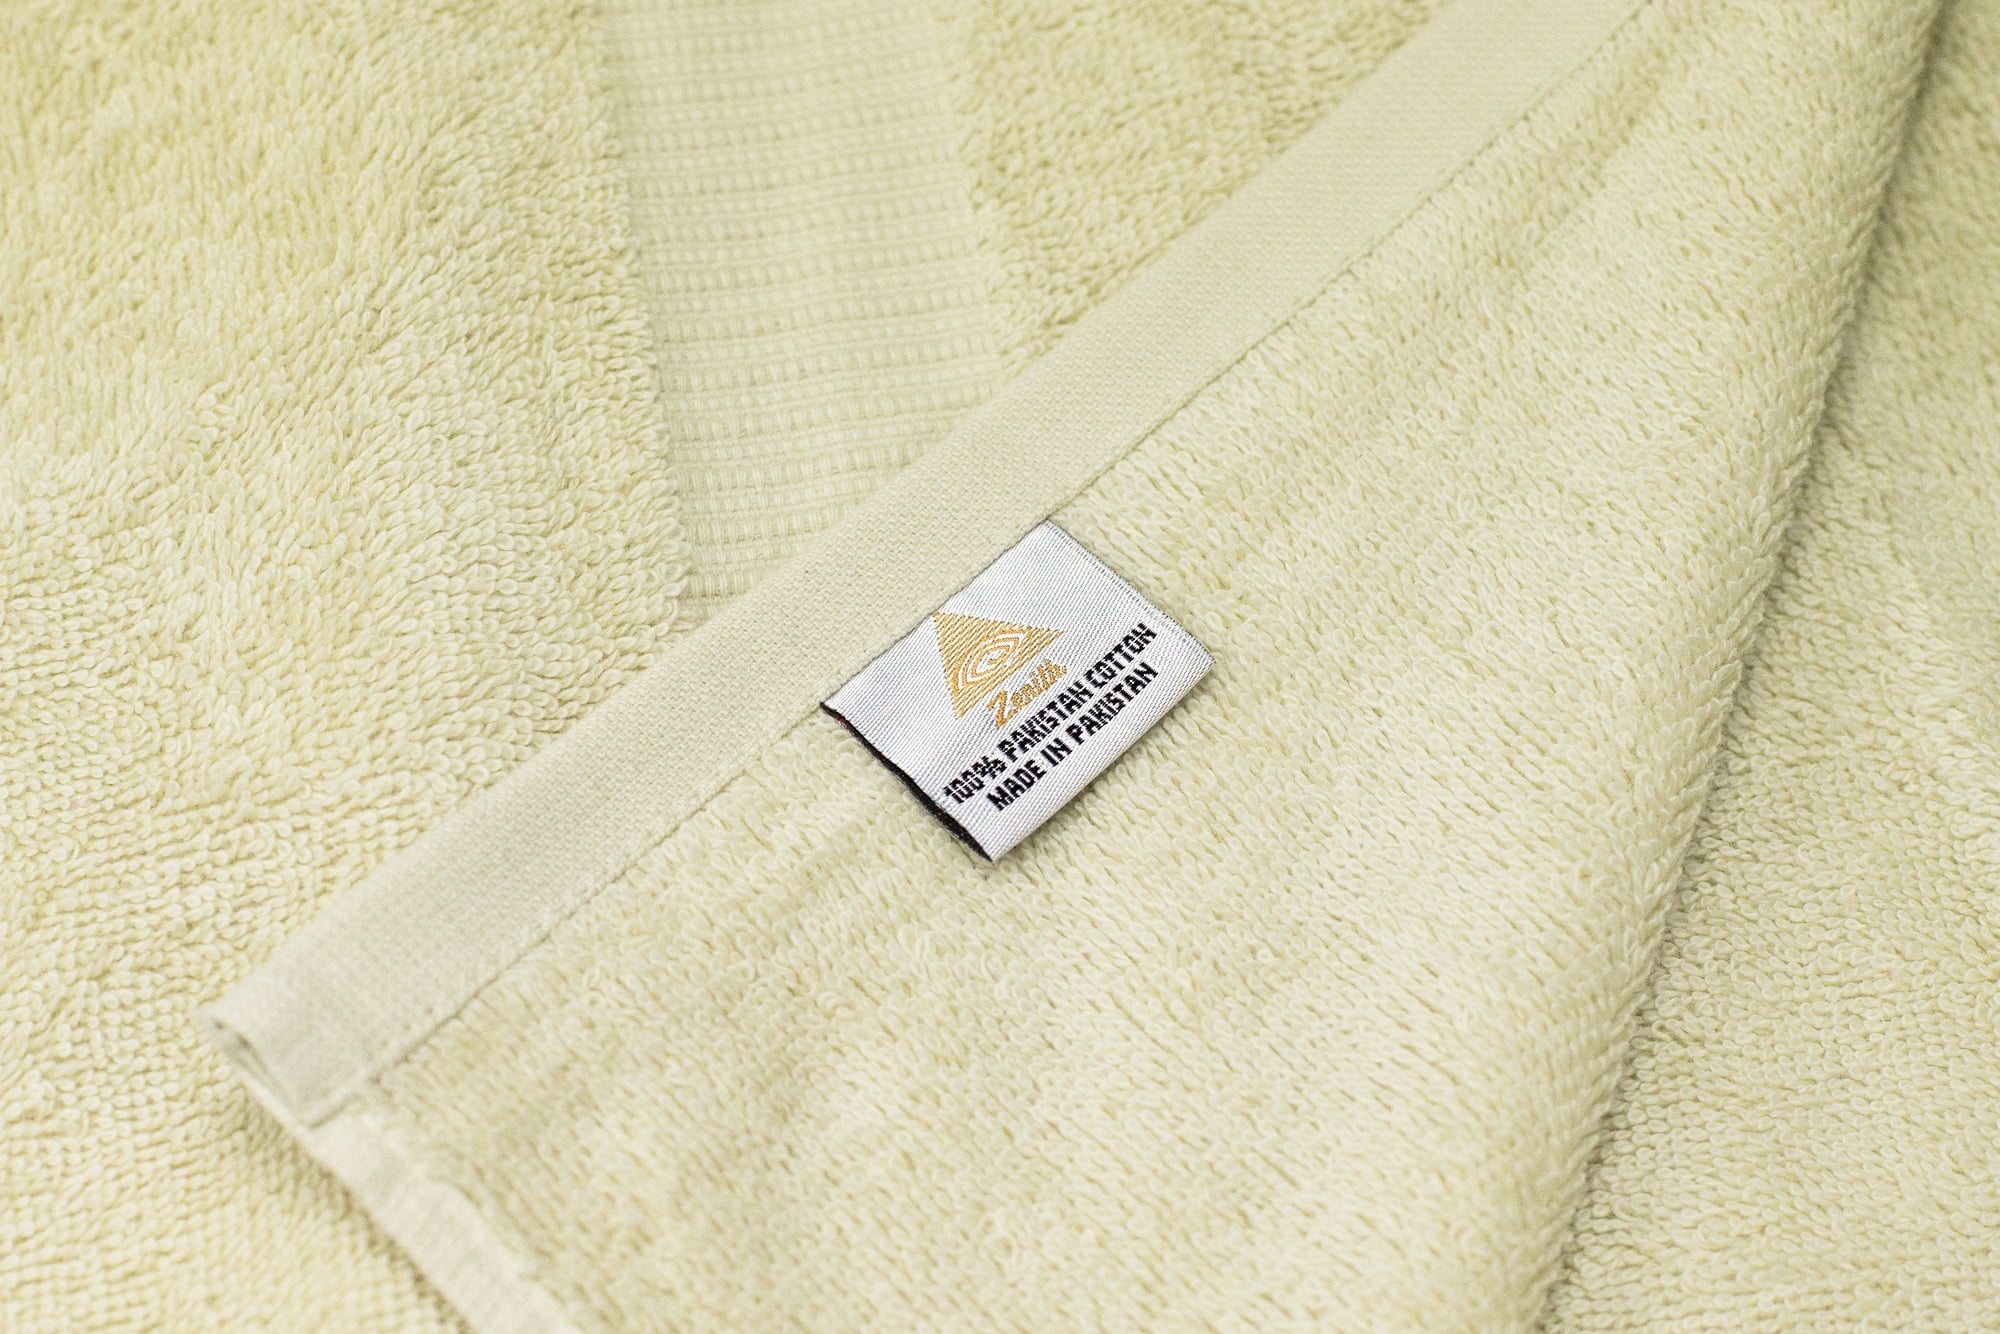 Zenith Luxury Bath Sheet towels - Extra Large Bath Towel 40 X 70, Beach  Towels, 600 GSM, Oversized Bath Towel, XL Bath Towel ,100% Cotton